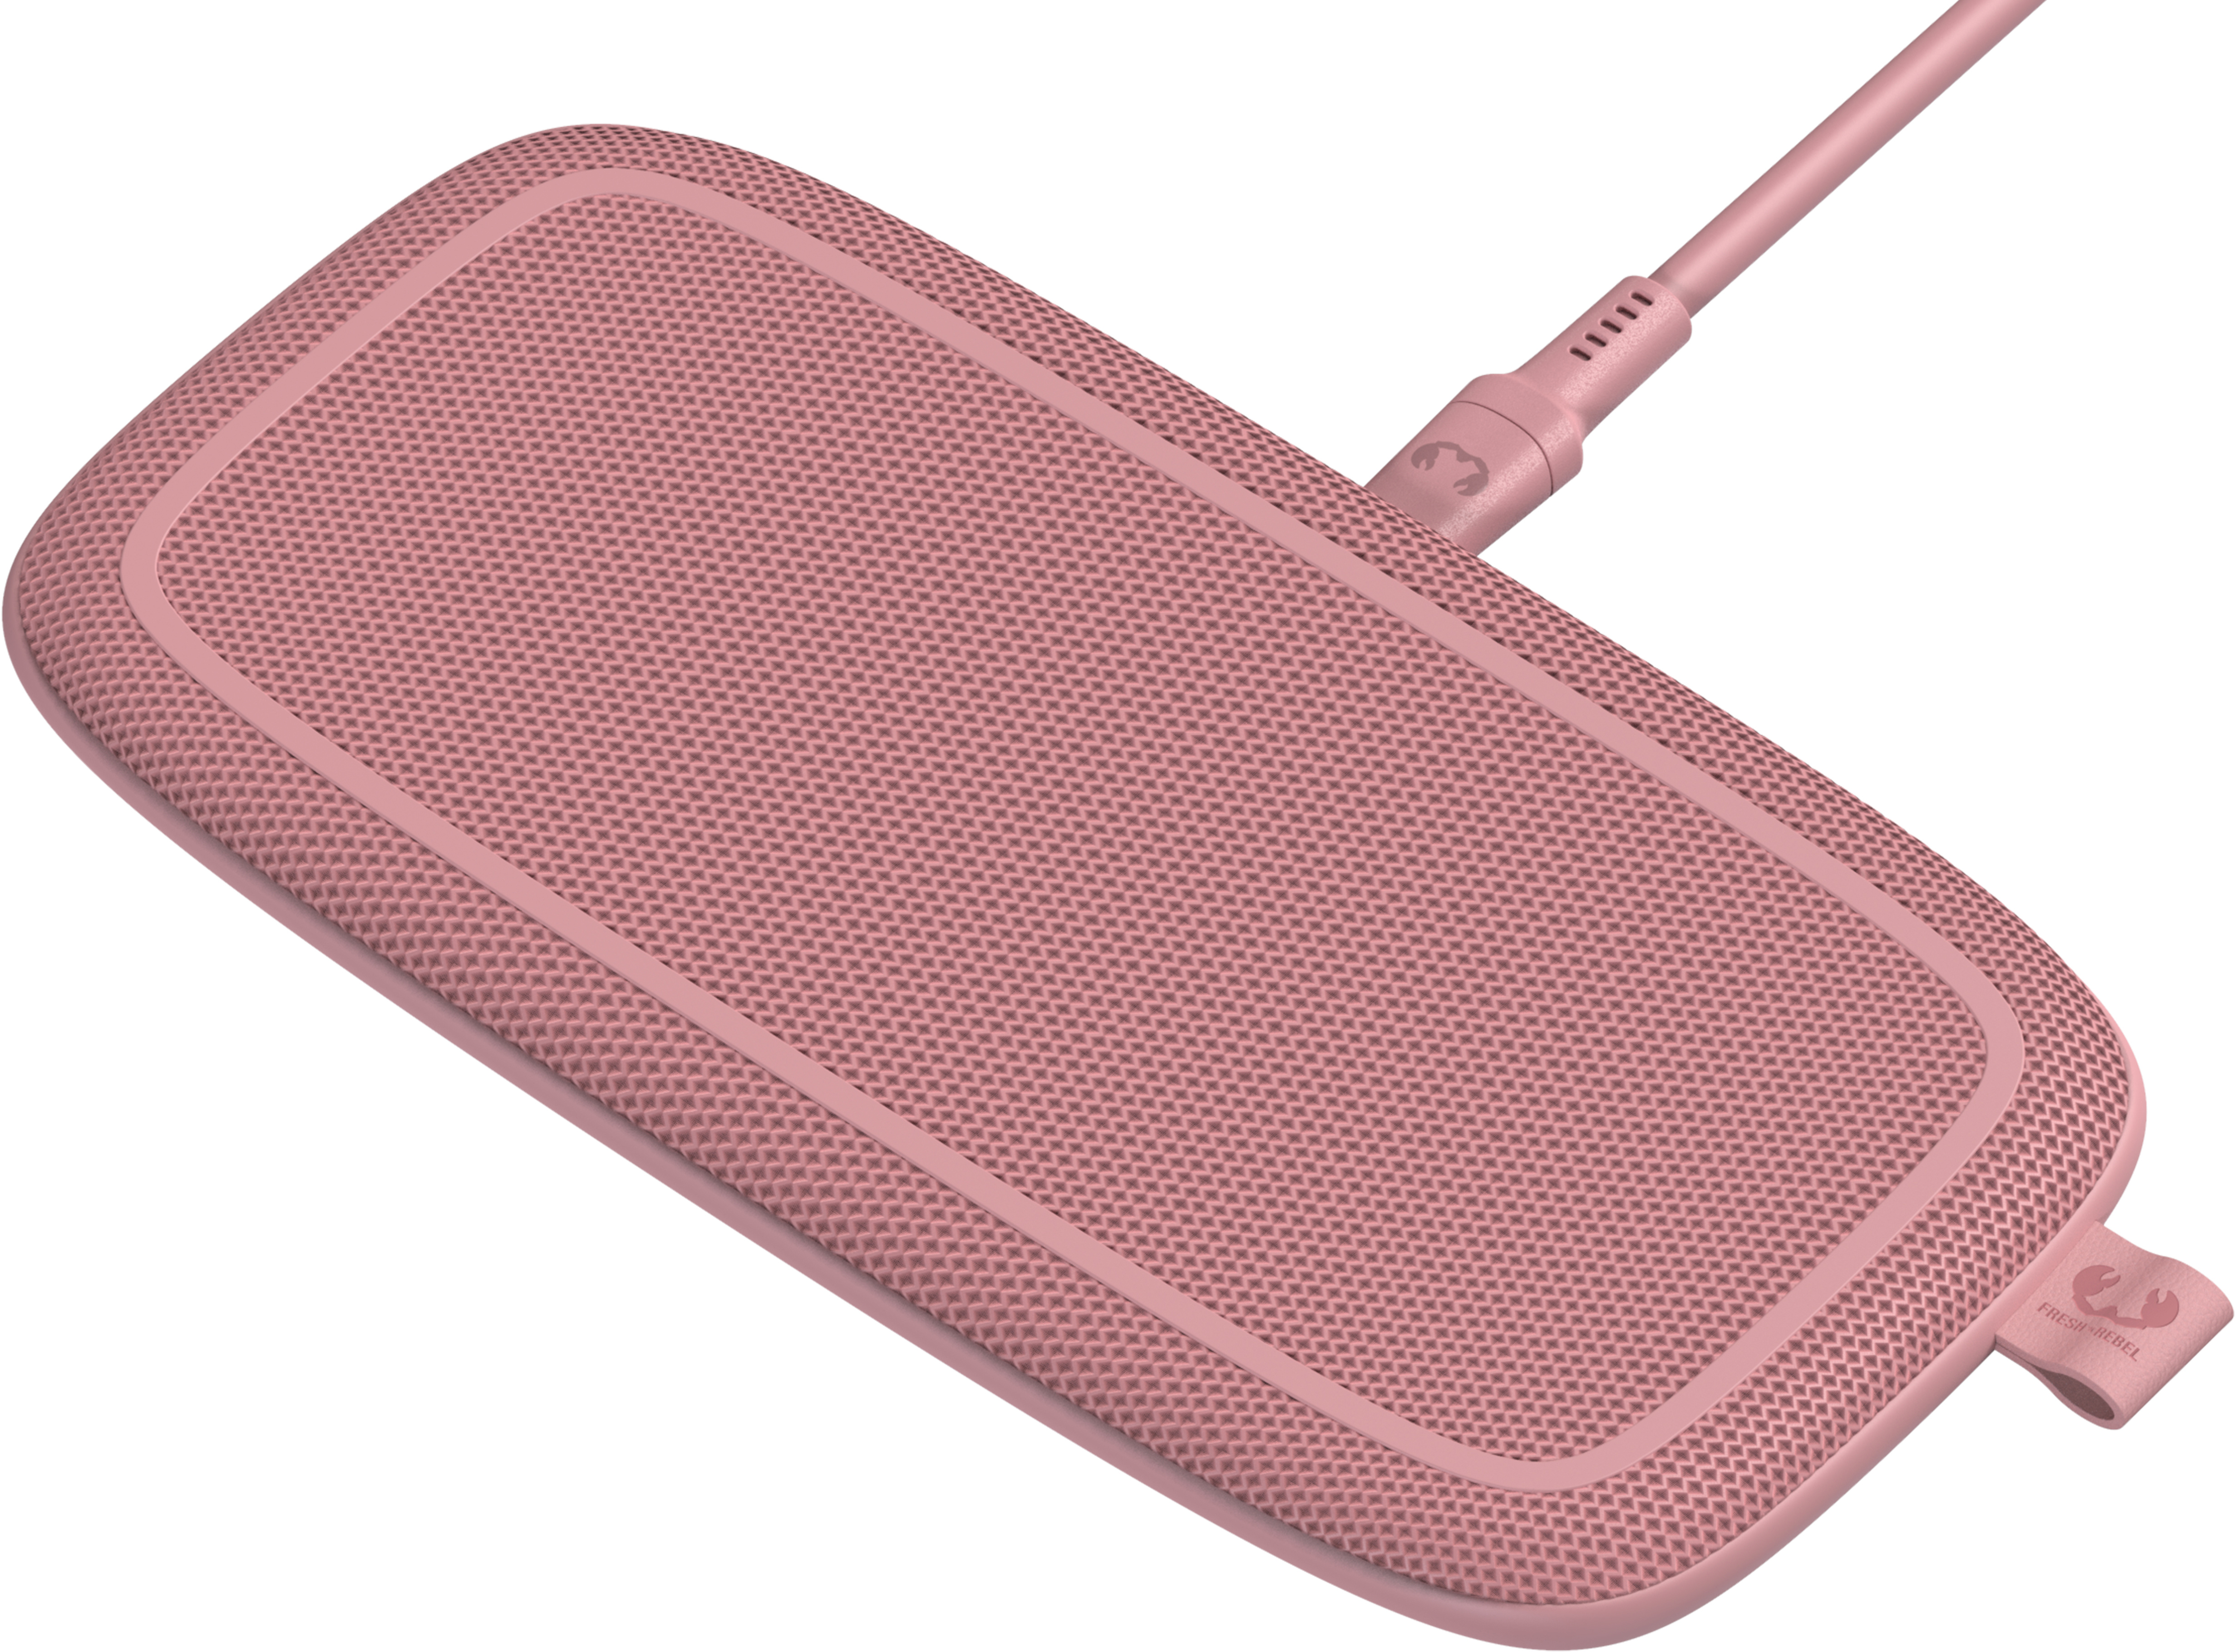 FRESH'N REBEL BASE DUO Charging Pad 4CP200DP Dusty Pink wireless Dusty Pink wireless